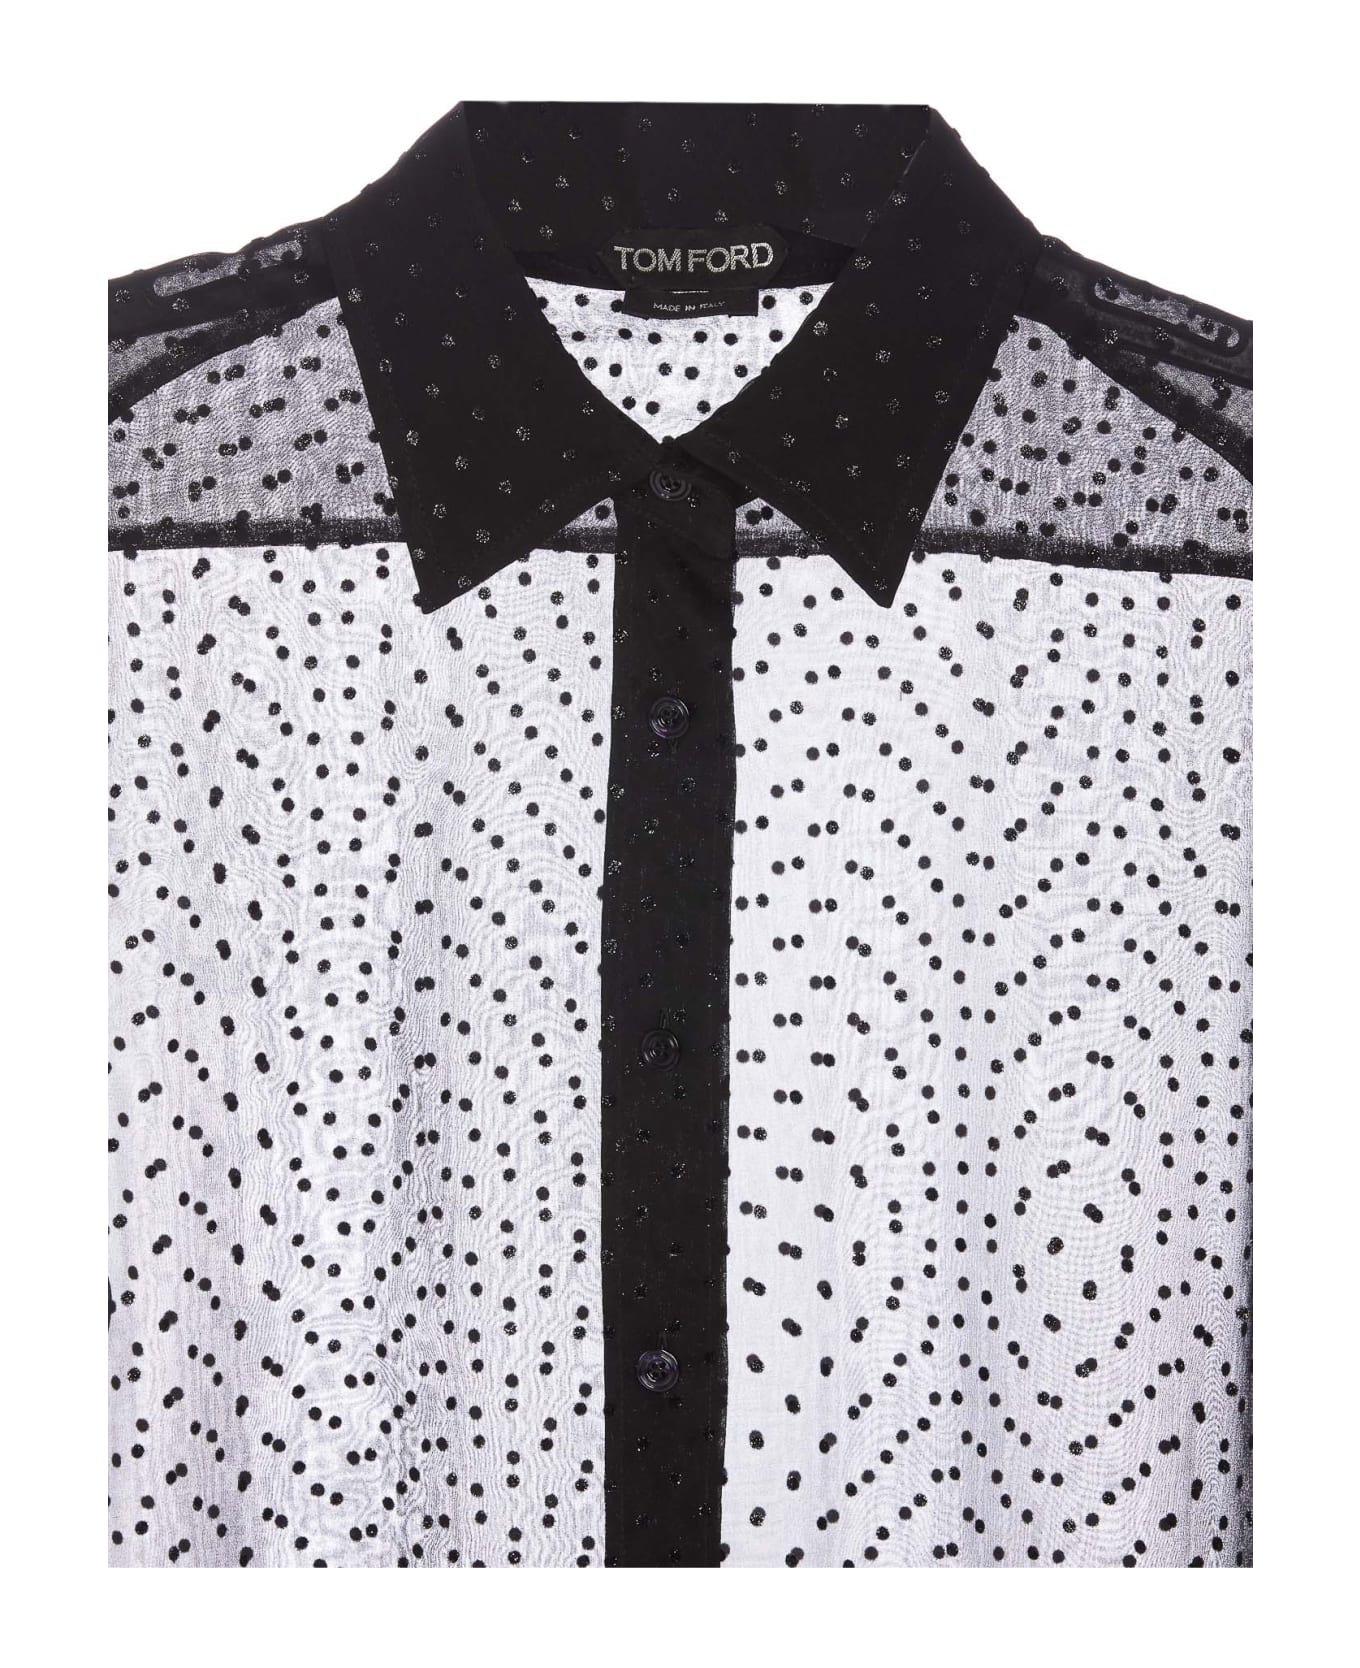 Tom Ford Flocked Polka Dots Shirt - Black シャツ